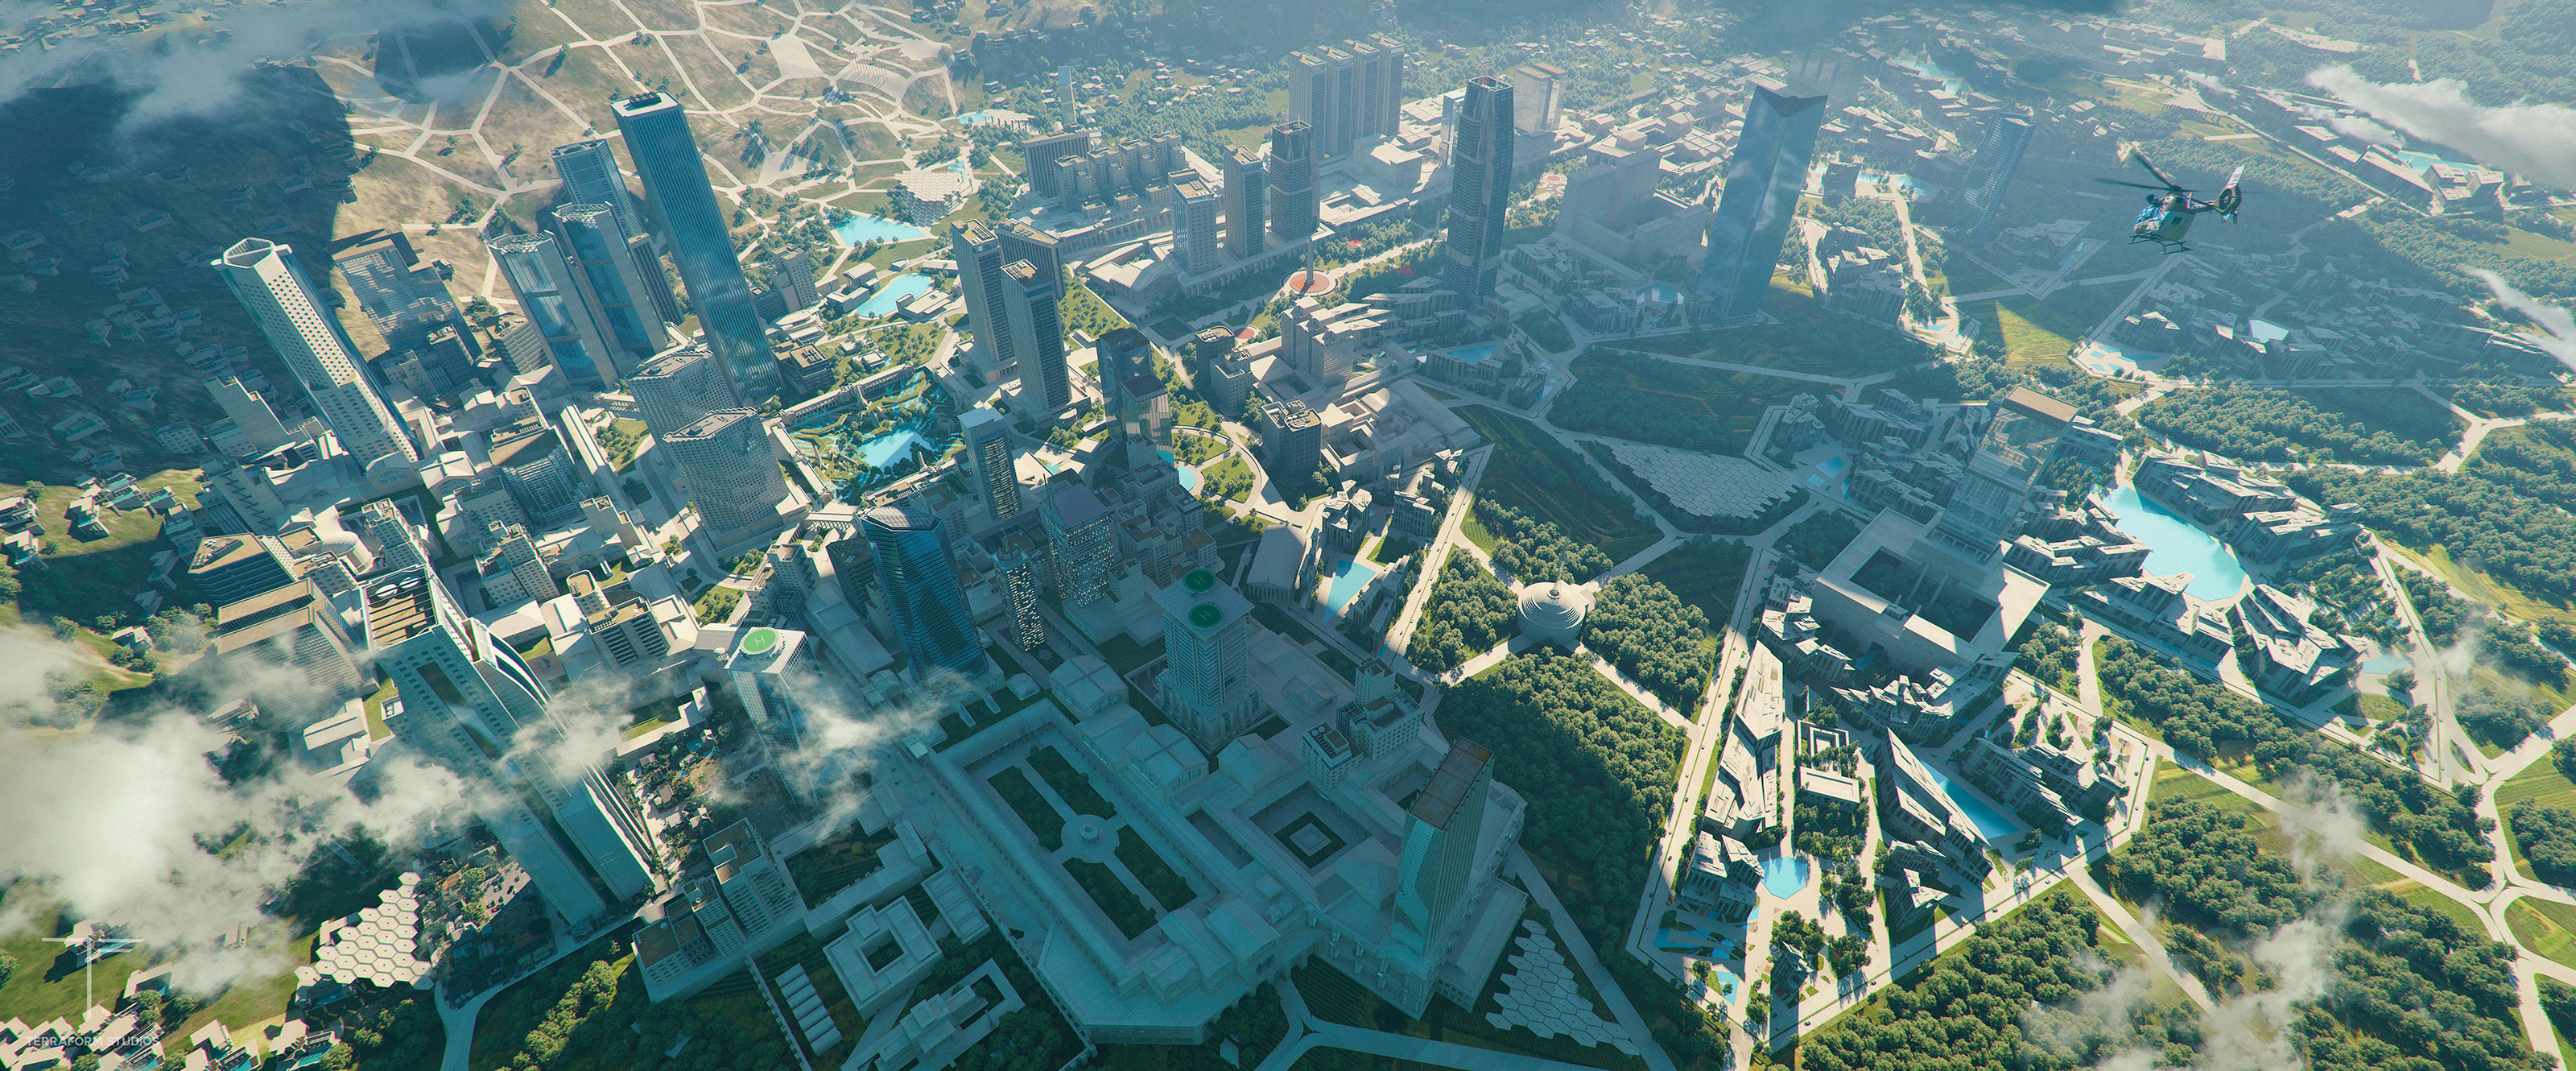 General 3200x1330 artwork digital art aerial view cityscape landscape